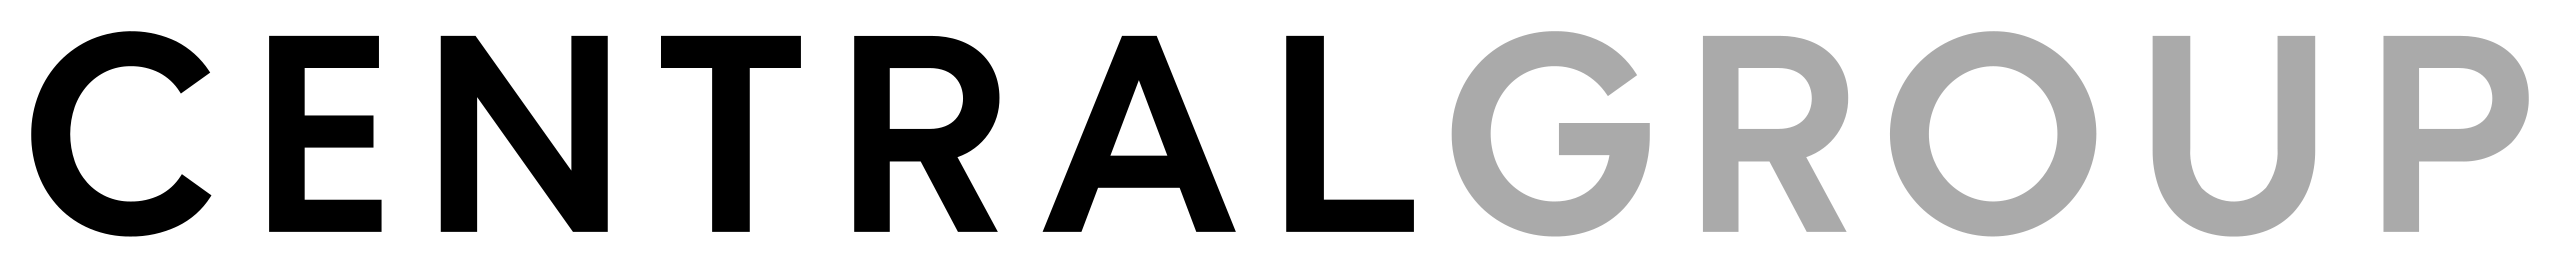 central-group's company logo